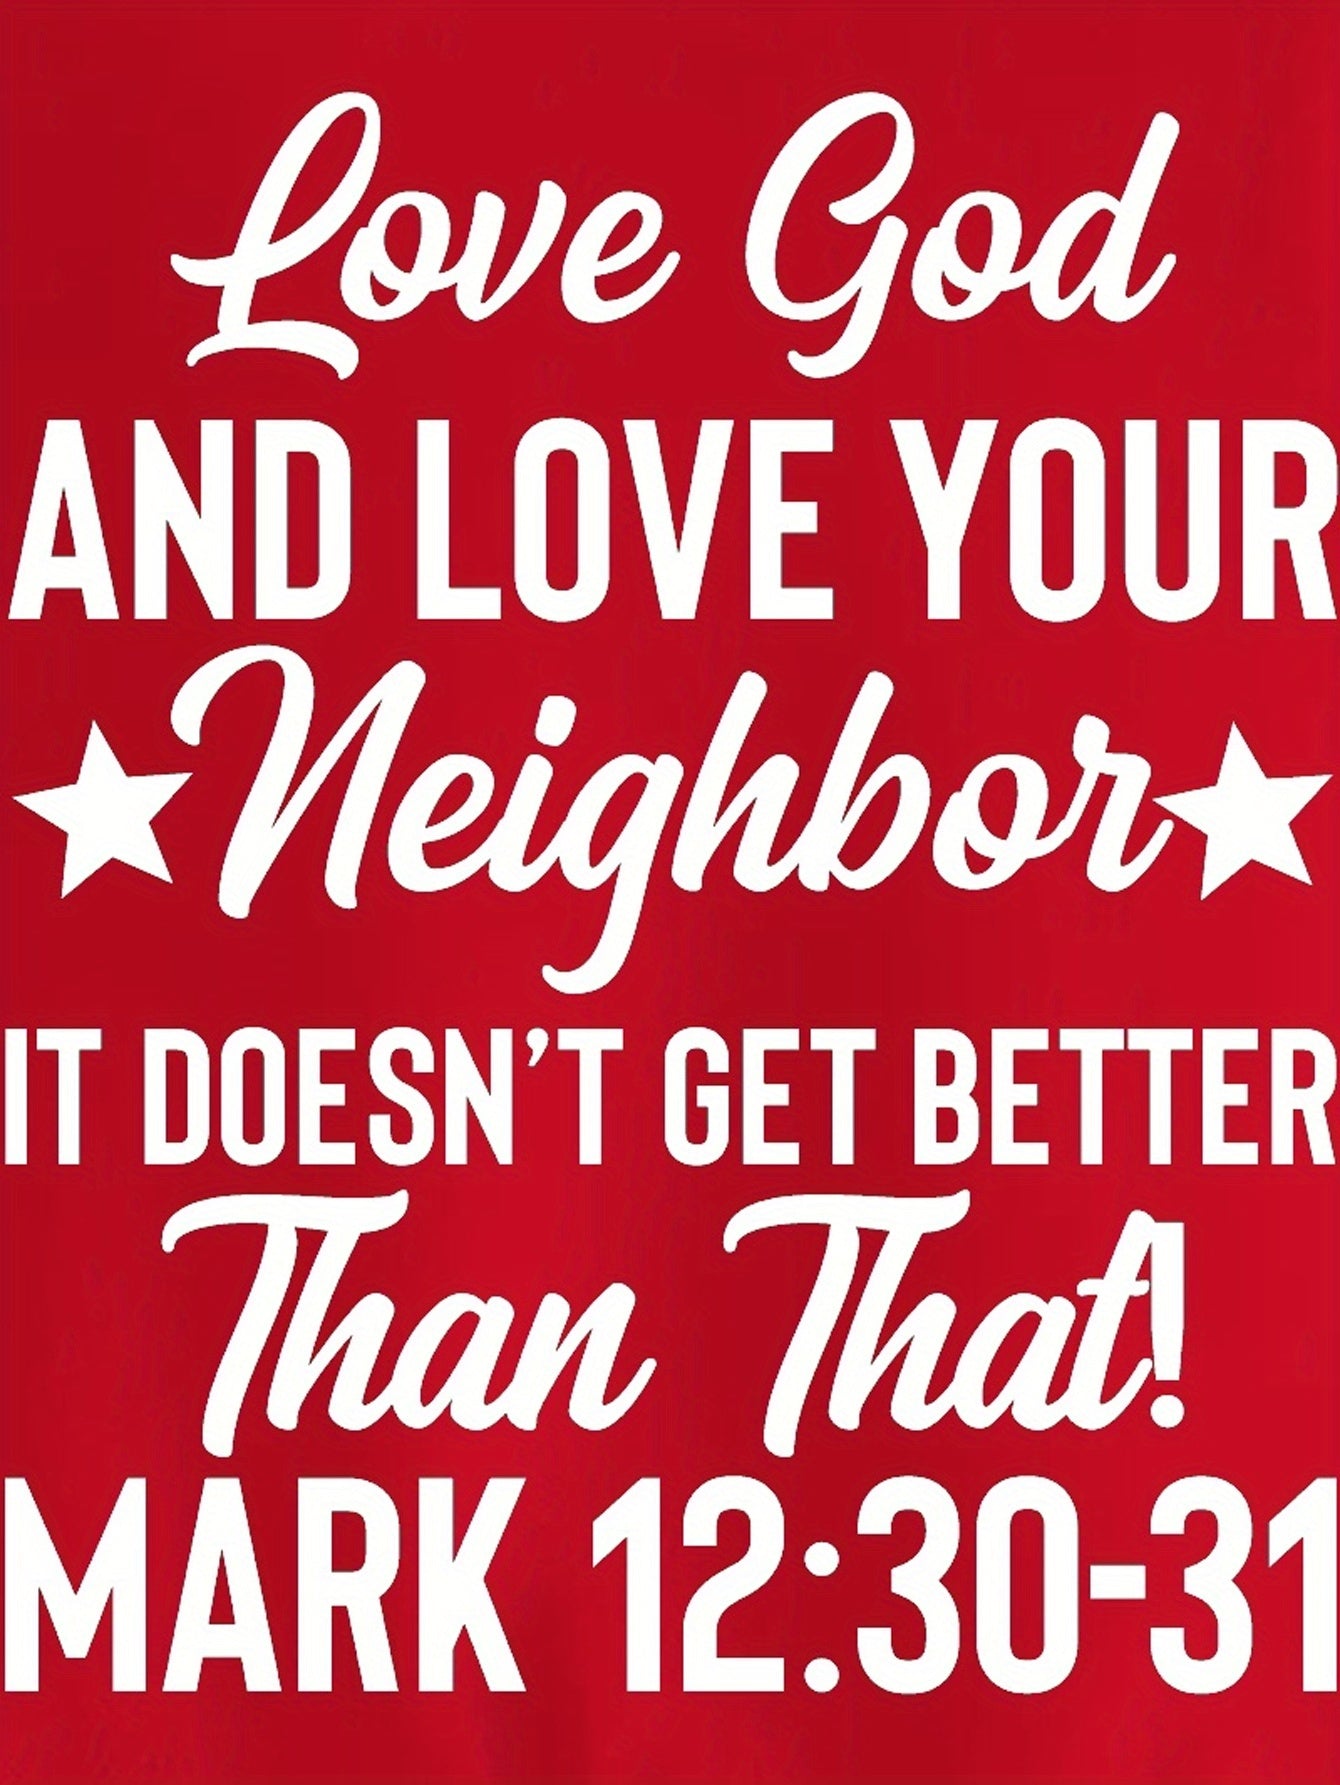 Mark 12:30-31 LOVE GOD AND LOVE YOUR NEIGHBOR Youth Christian Pullover Sweatshirt claimedbygoddesigns